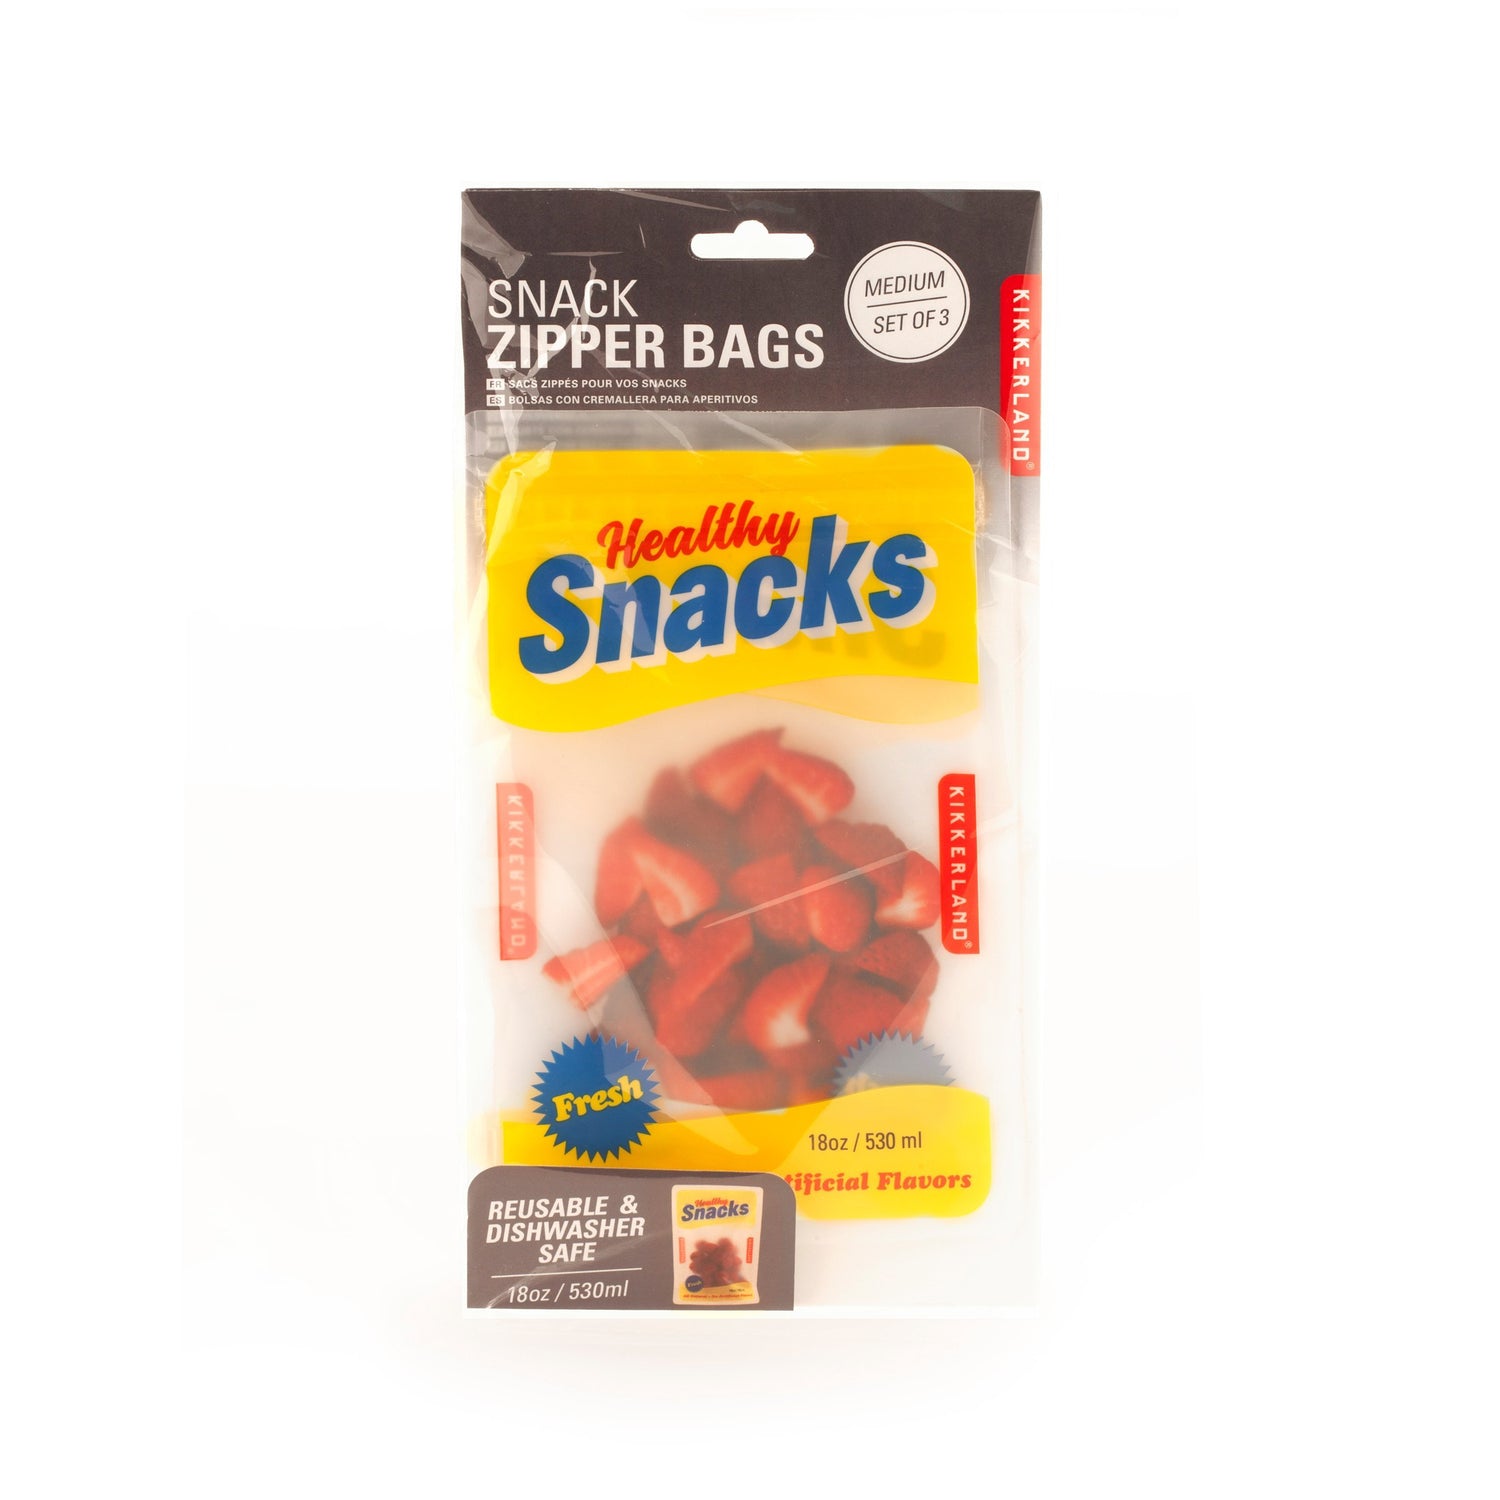 Medium Snack Zip Bags